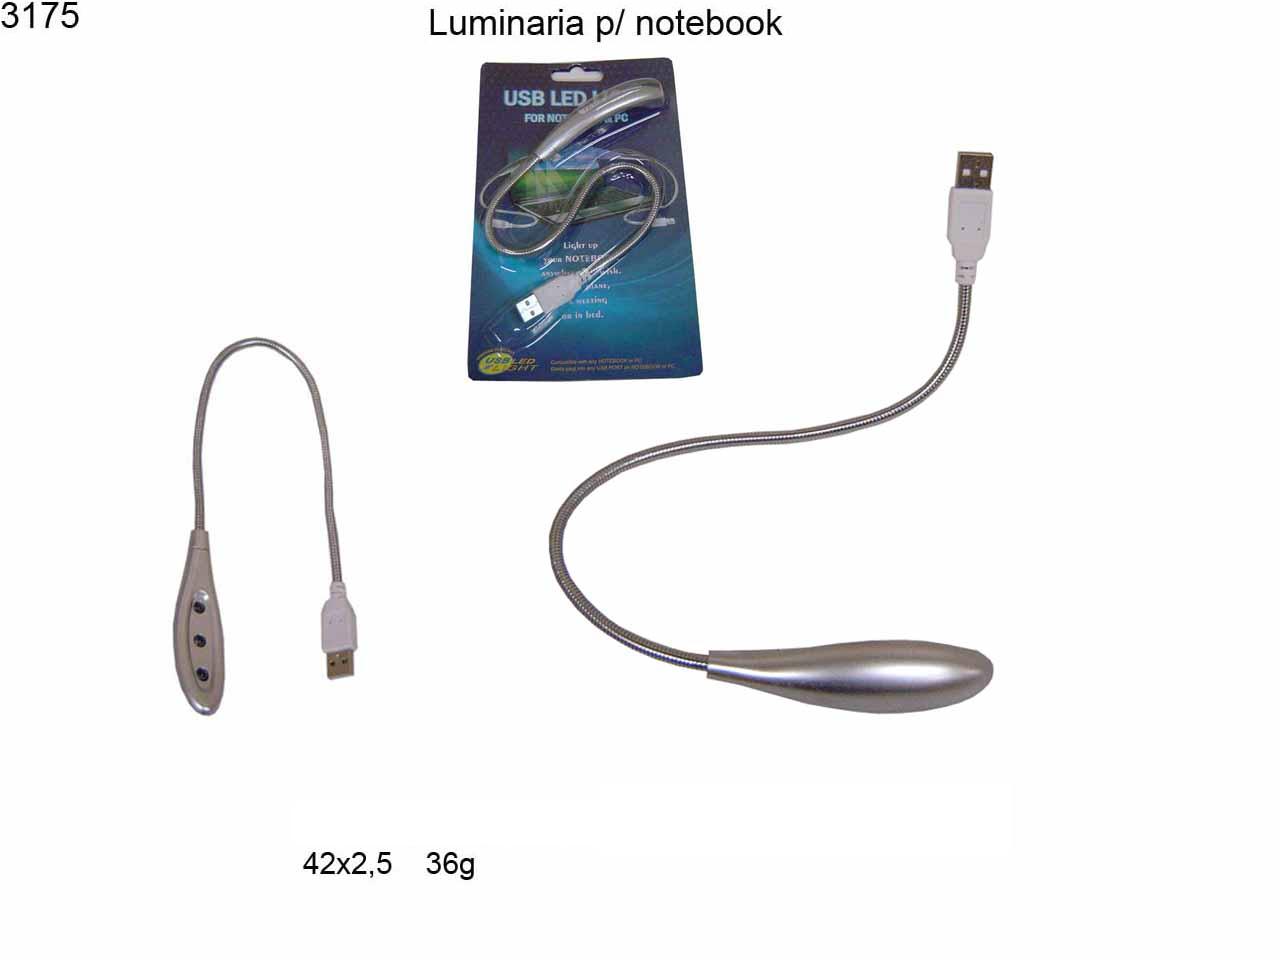 Luminaria p/ notebook (3175)